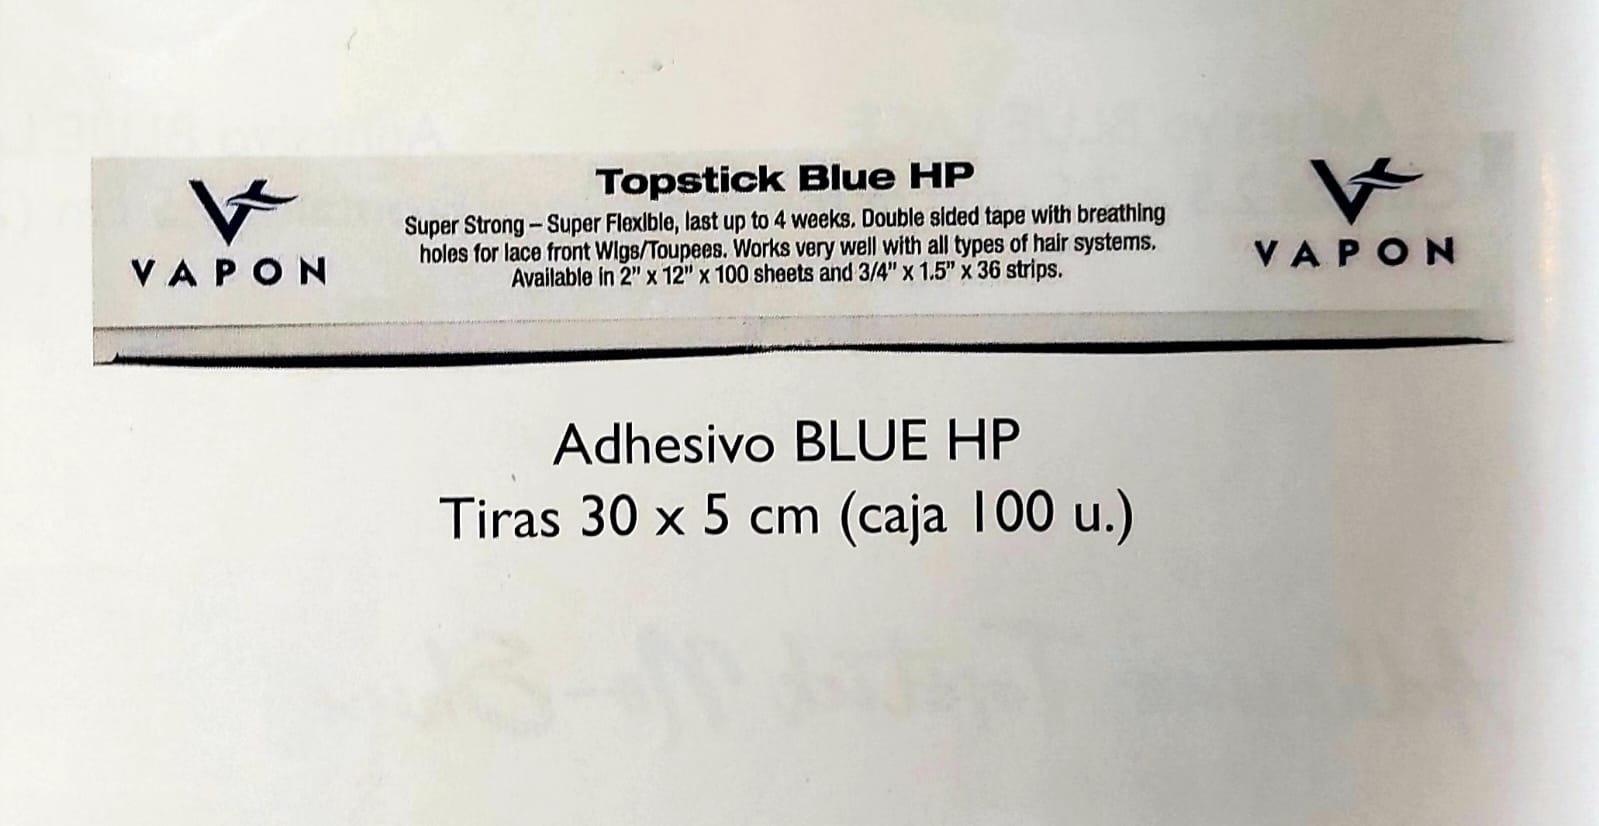 Adhesivo BLUE HP Tiras 30cm x 5cm (caixa 100 u.)